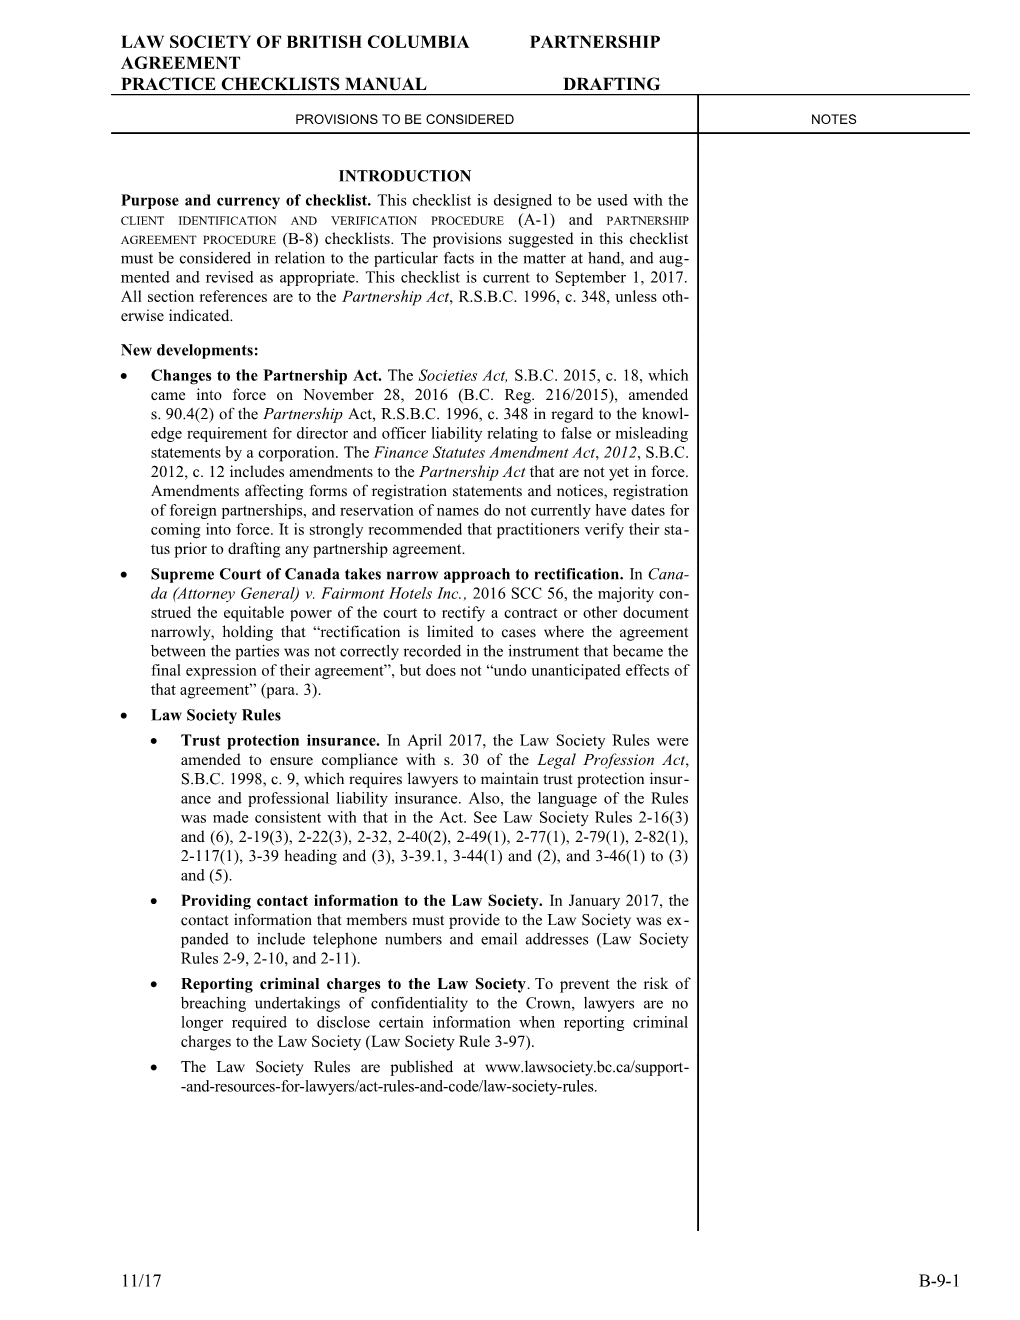 Practice Checklists Manual: Partnership Agreement Drafting Checklist